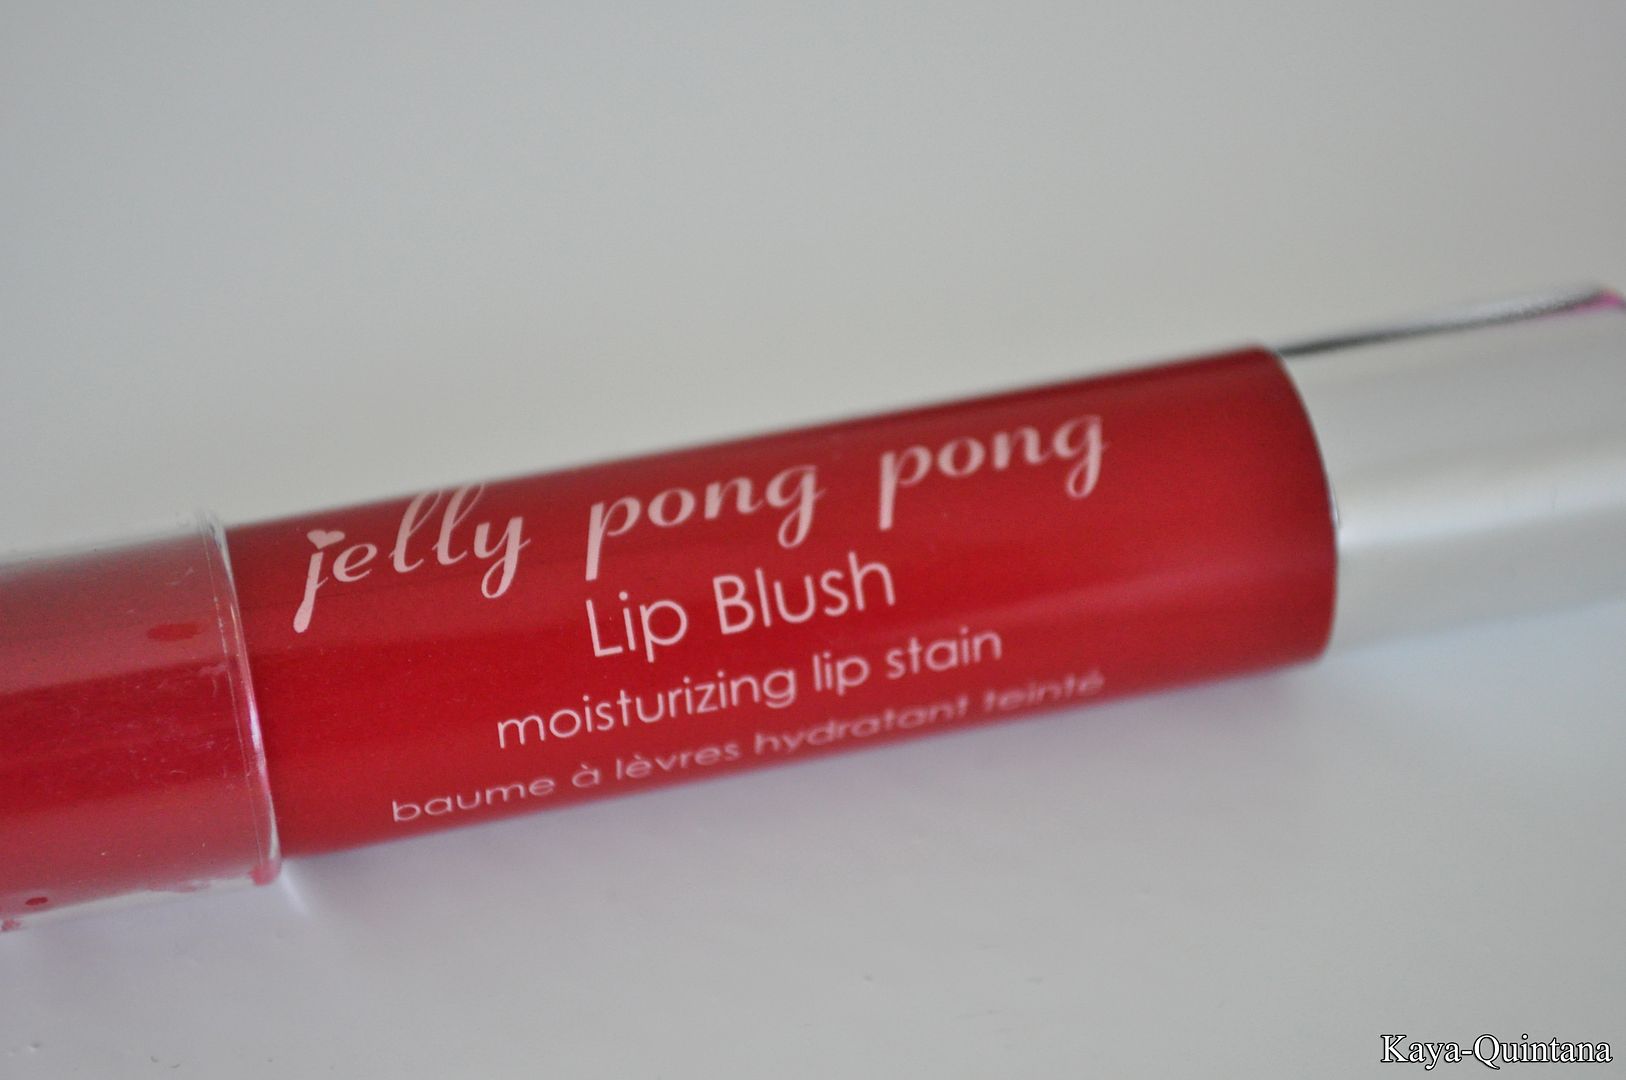 jelly pong pong lip blush moisturizing lip stain